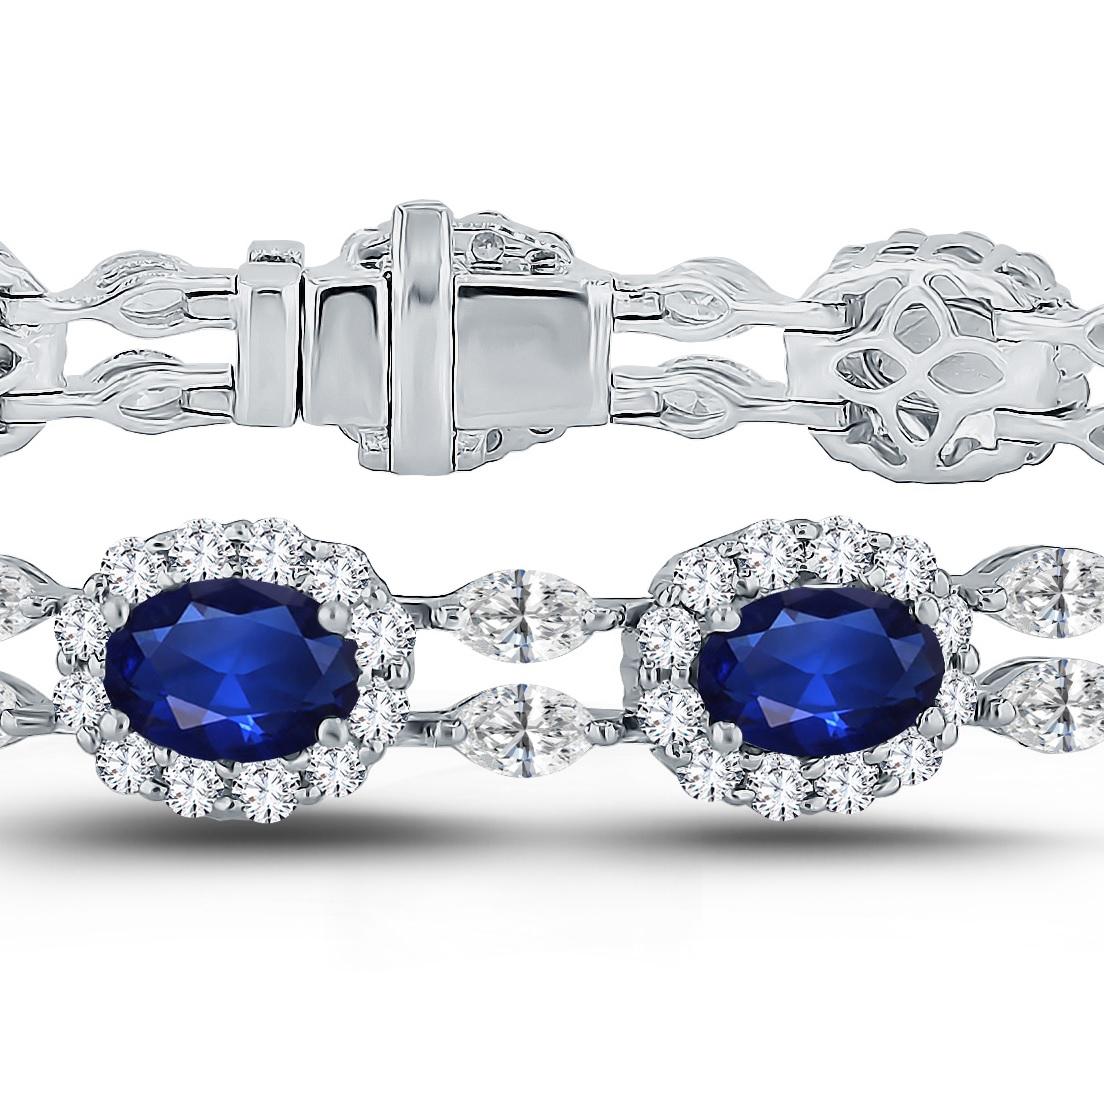 Contemporary 9.42 Carat Vivid Blue Oval Cut Sapphire and 3.94 Carat Diamond Bracelet ref363 For Sale